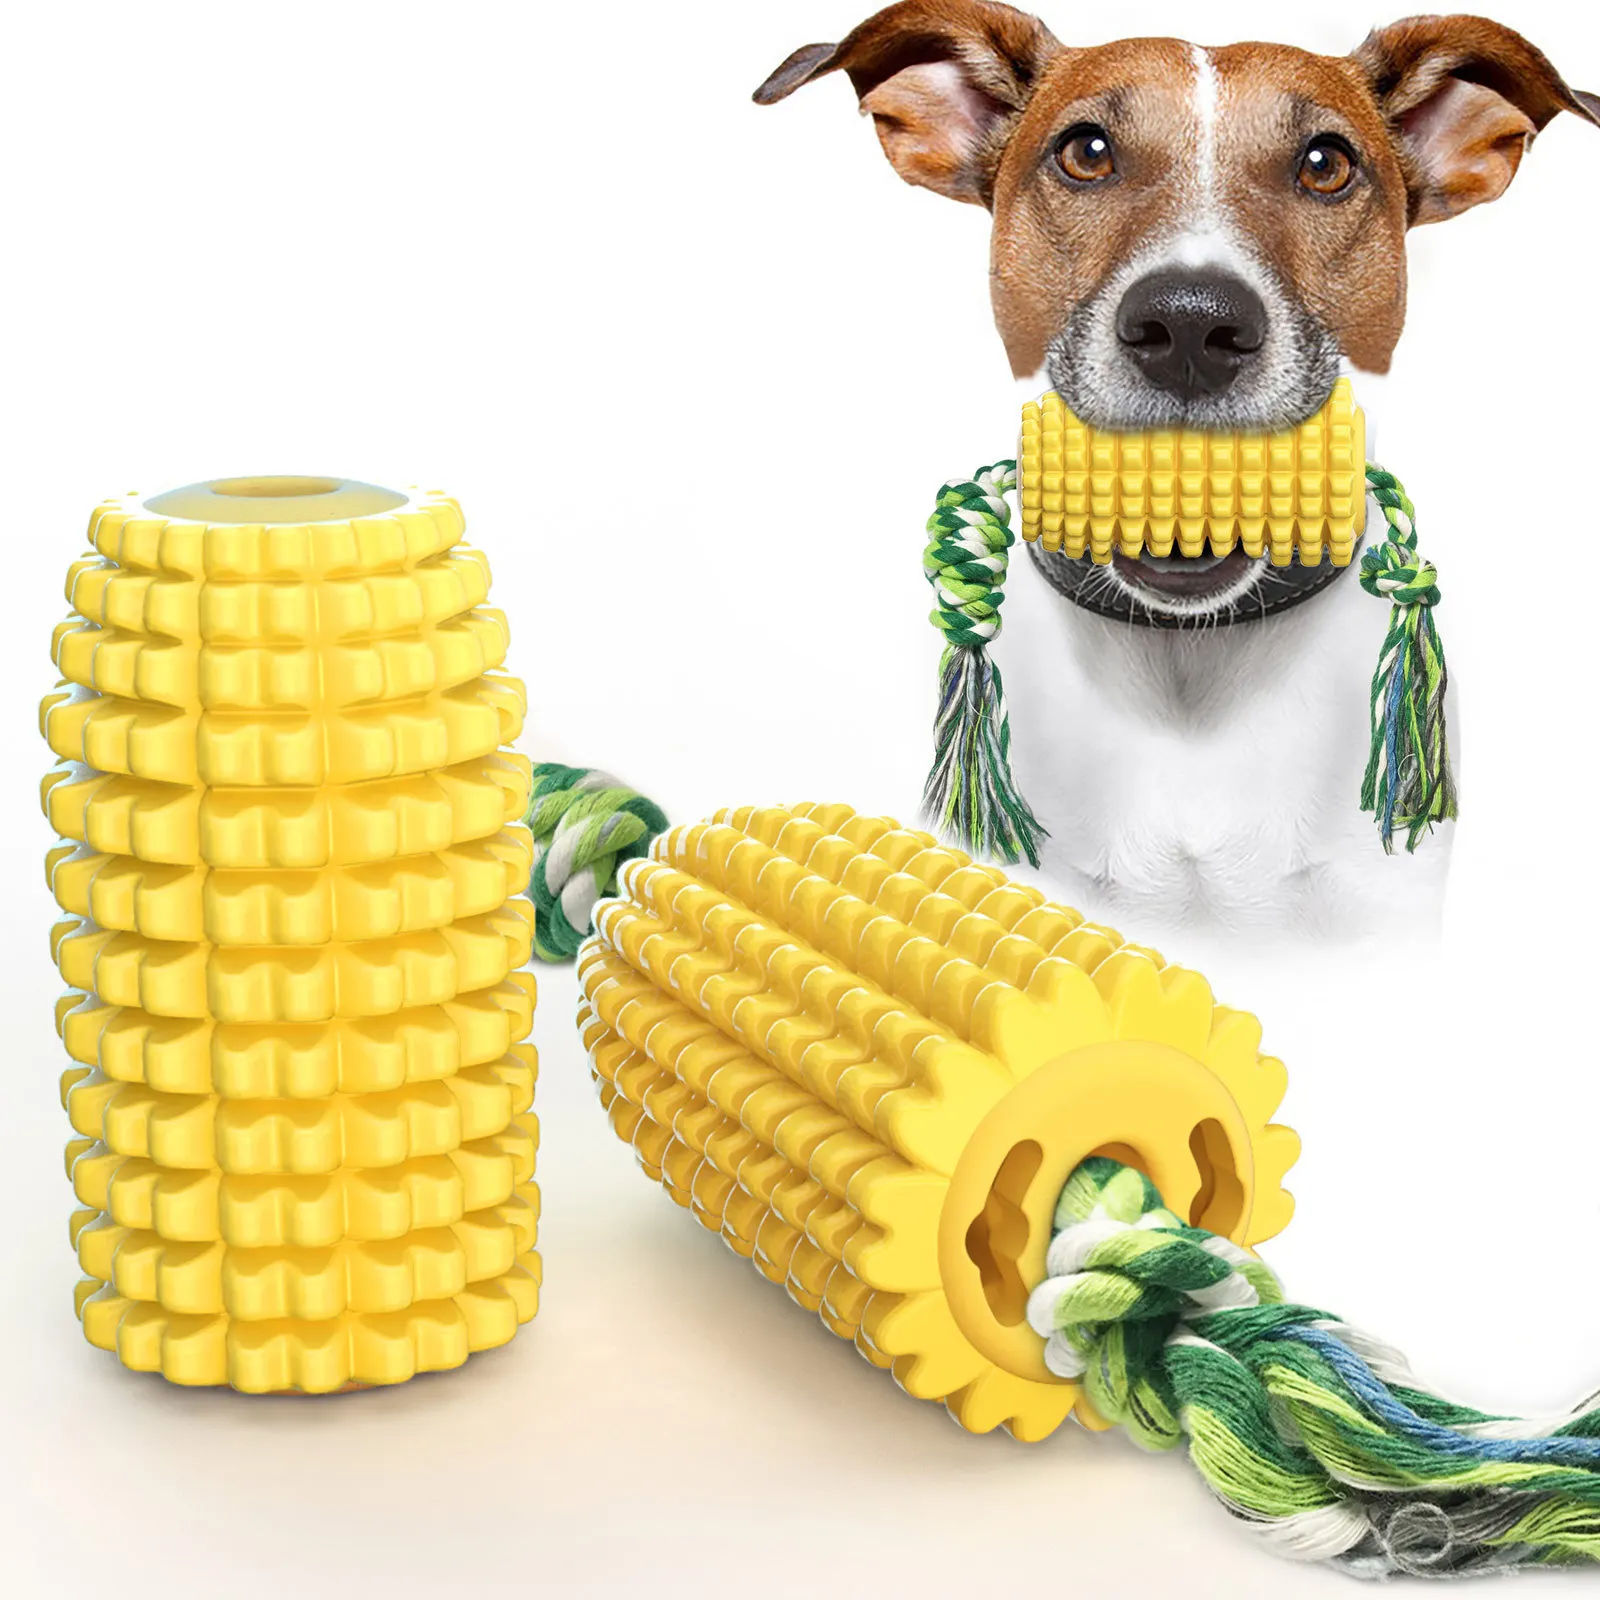 

Bite Resistant Tpr Eco Friendly Dog Chew Interactive Molar Dog Toy Molar Stick, Yellow, green